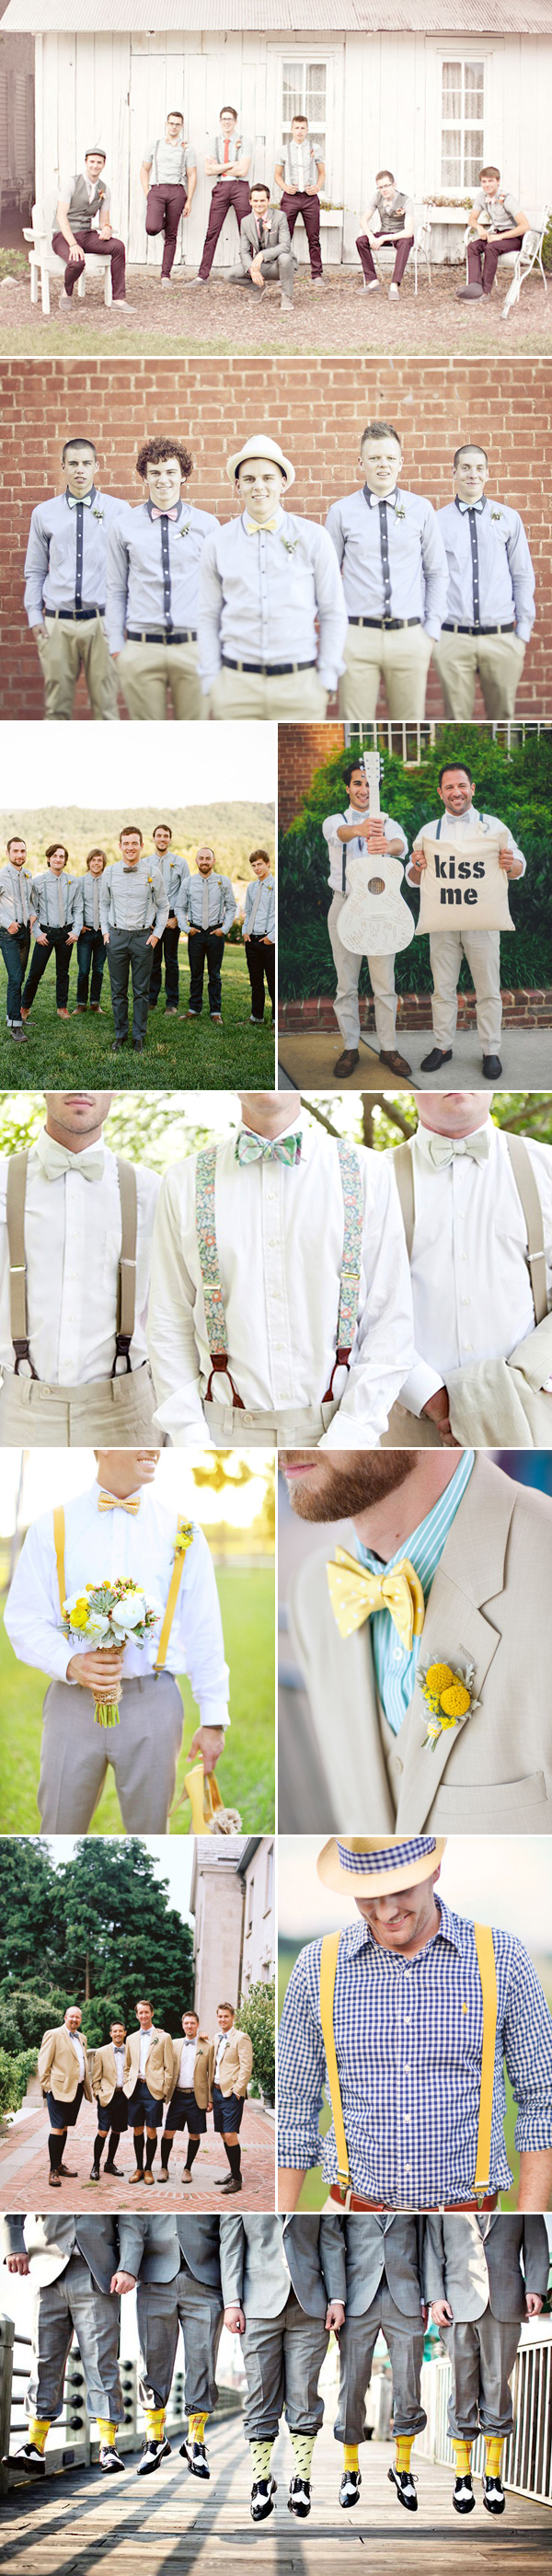 groomsmen01-casual